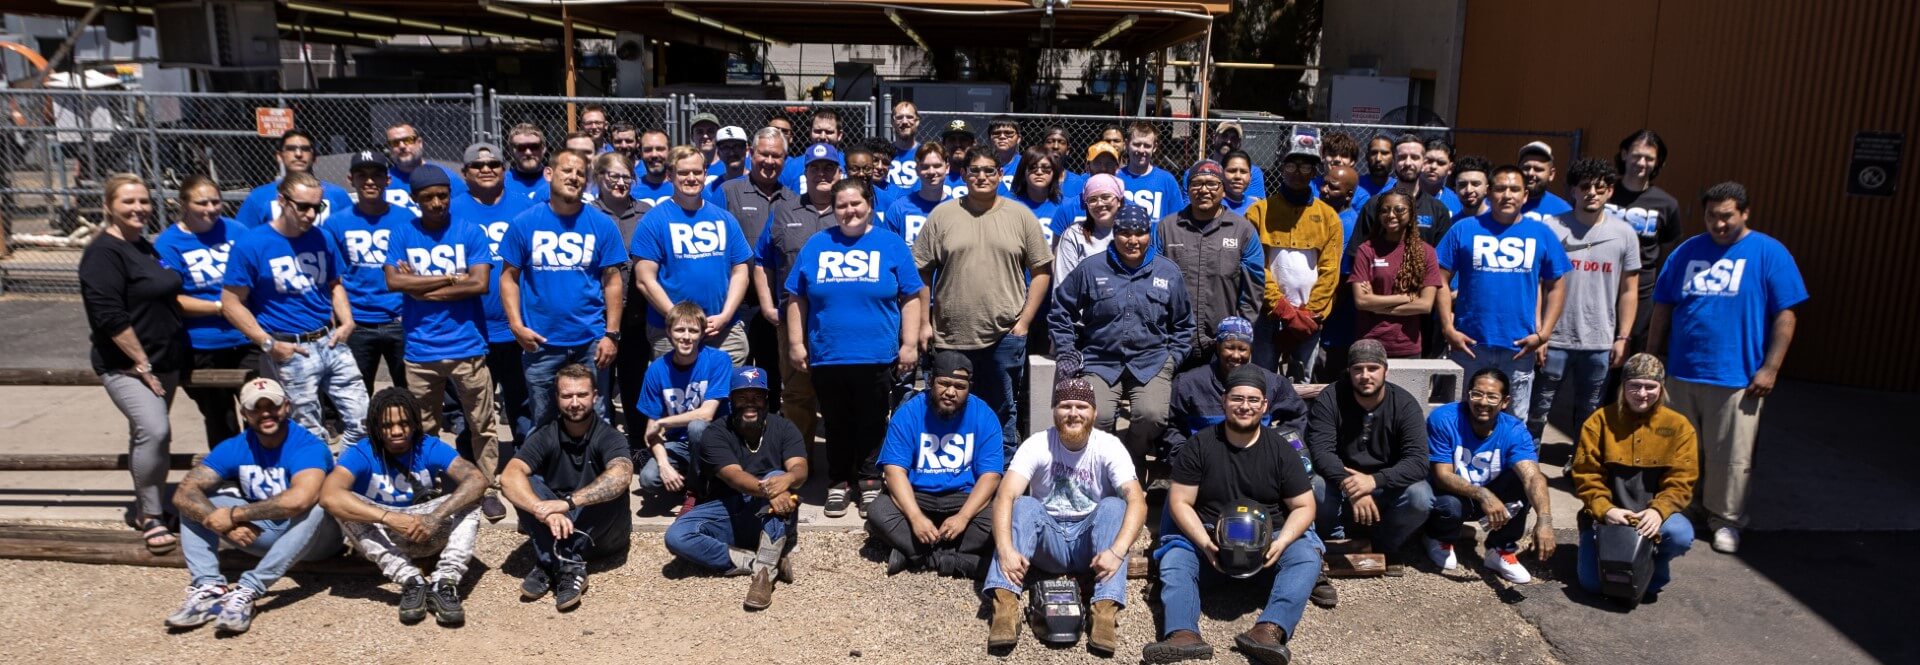 RSI Group Photo 1